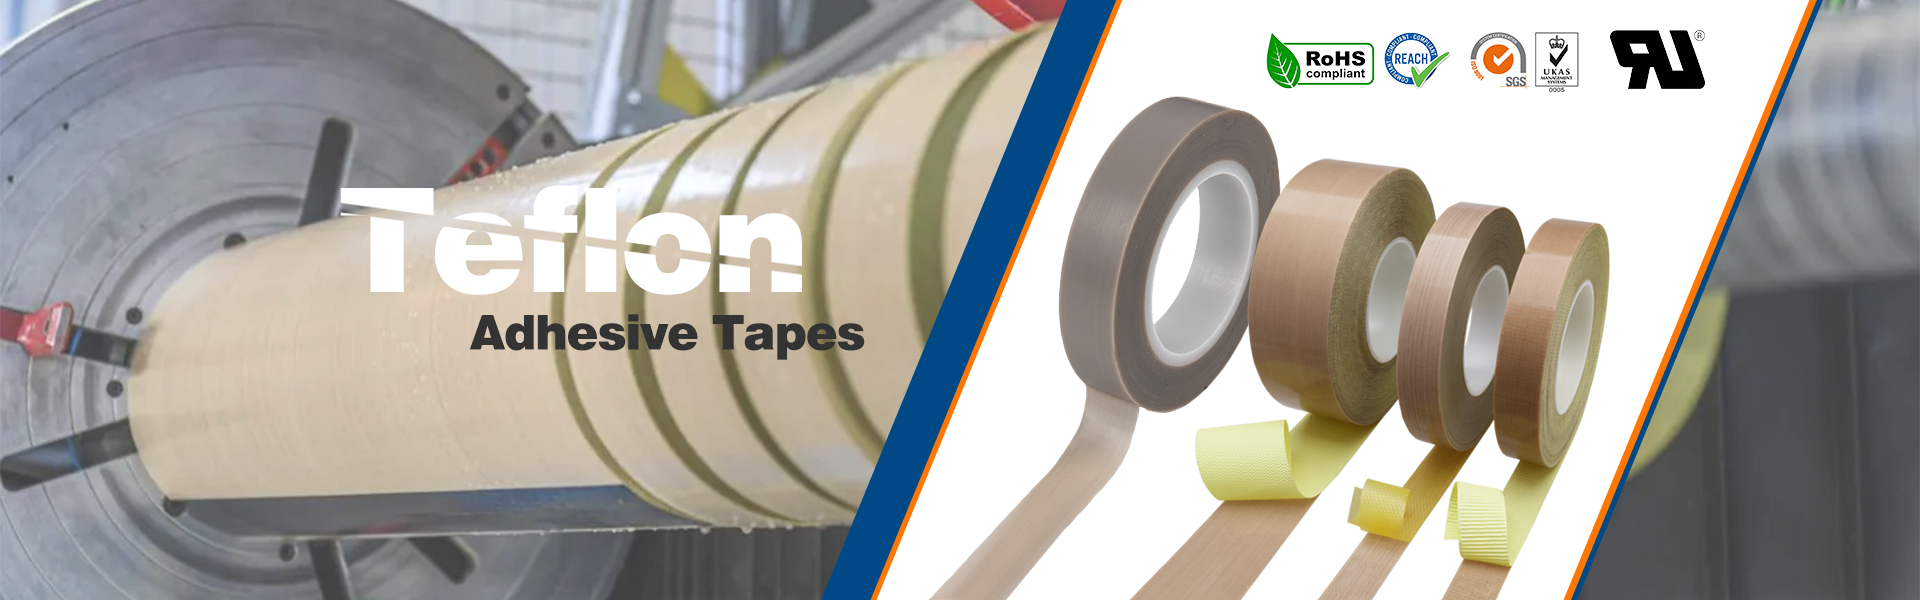 PTFE Teflon Fiberglass Adhesive Tapes China Manufacturers and Suppliers